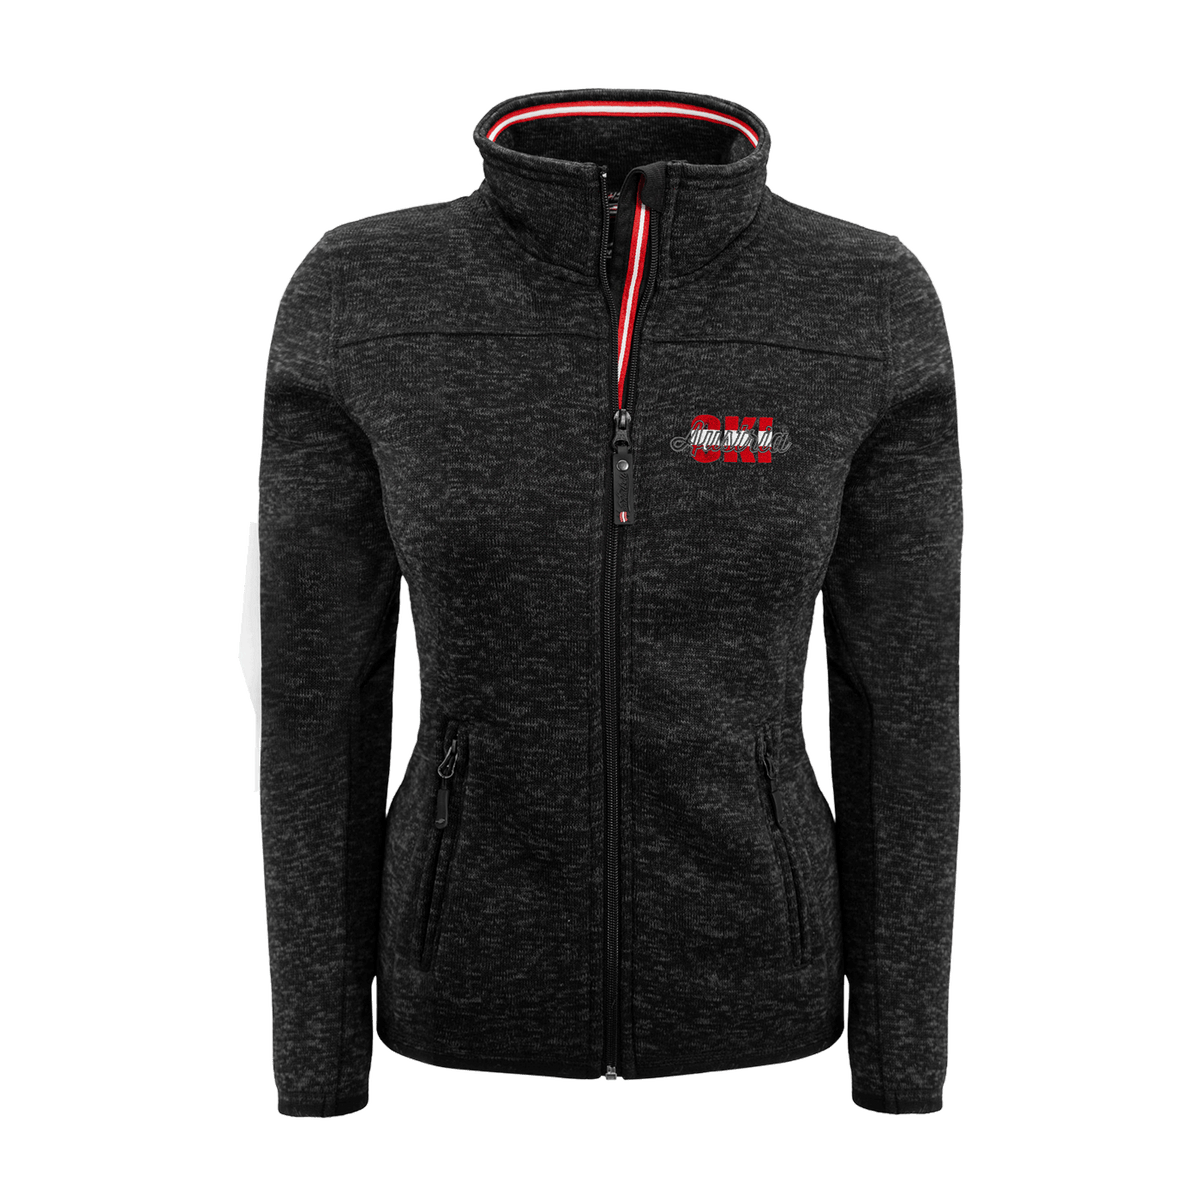 Strickfleece Jacke ohne Kapuze für Damen Austria Ski #Farbe_#Schwarz